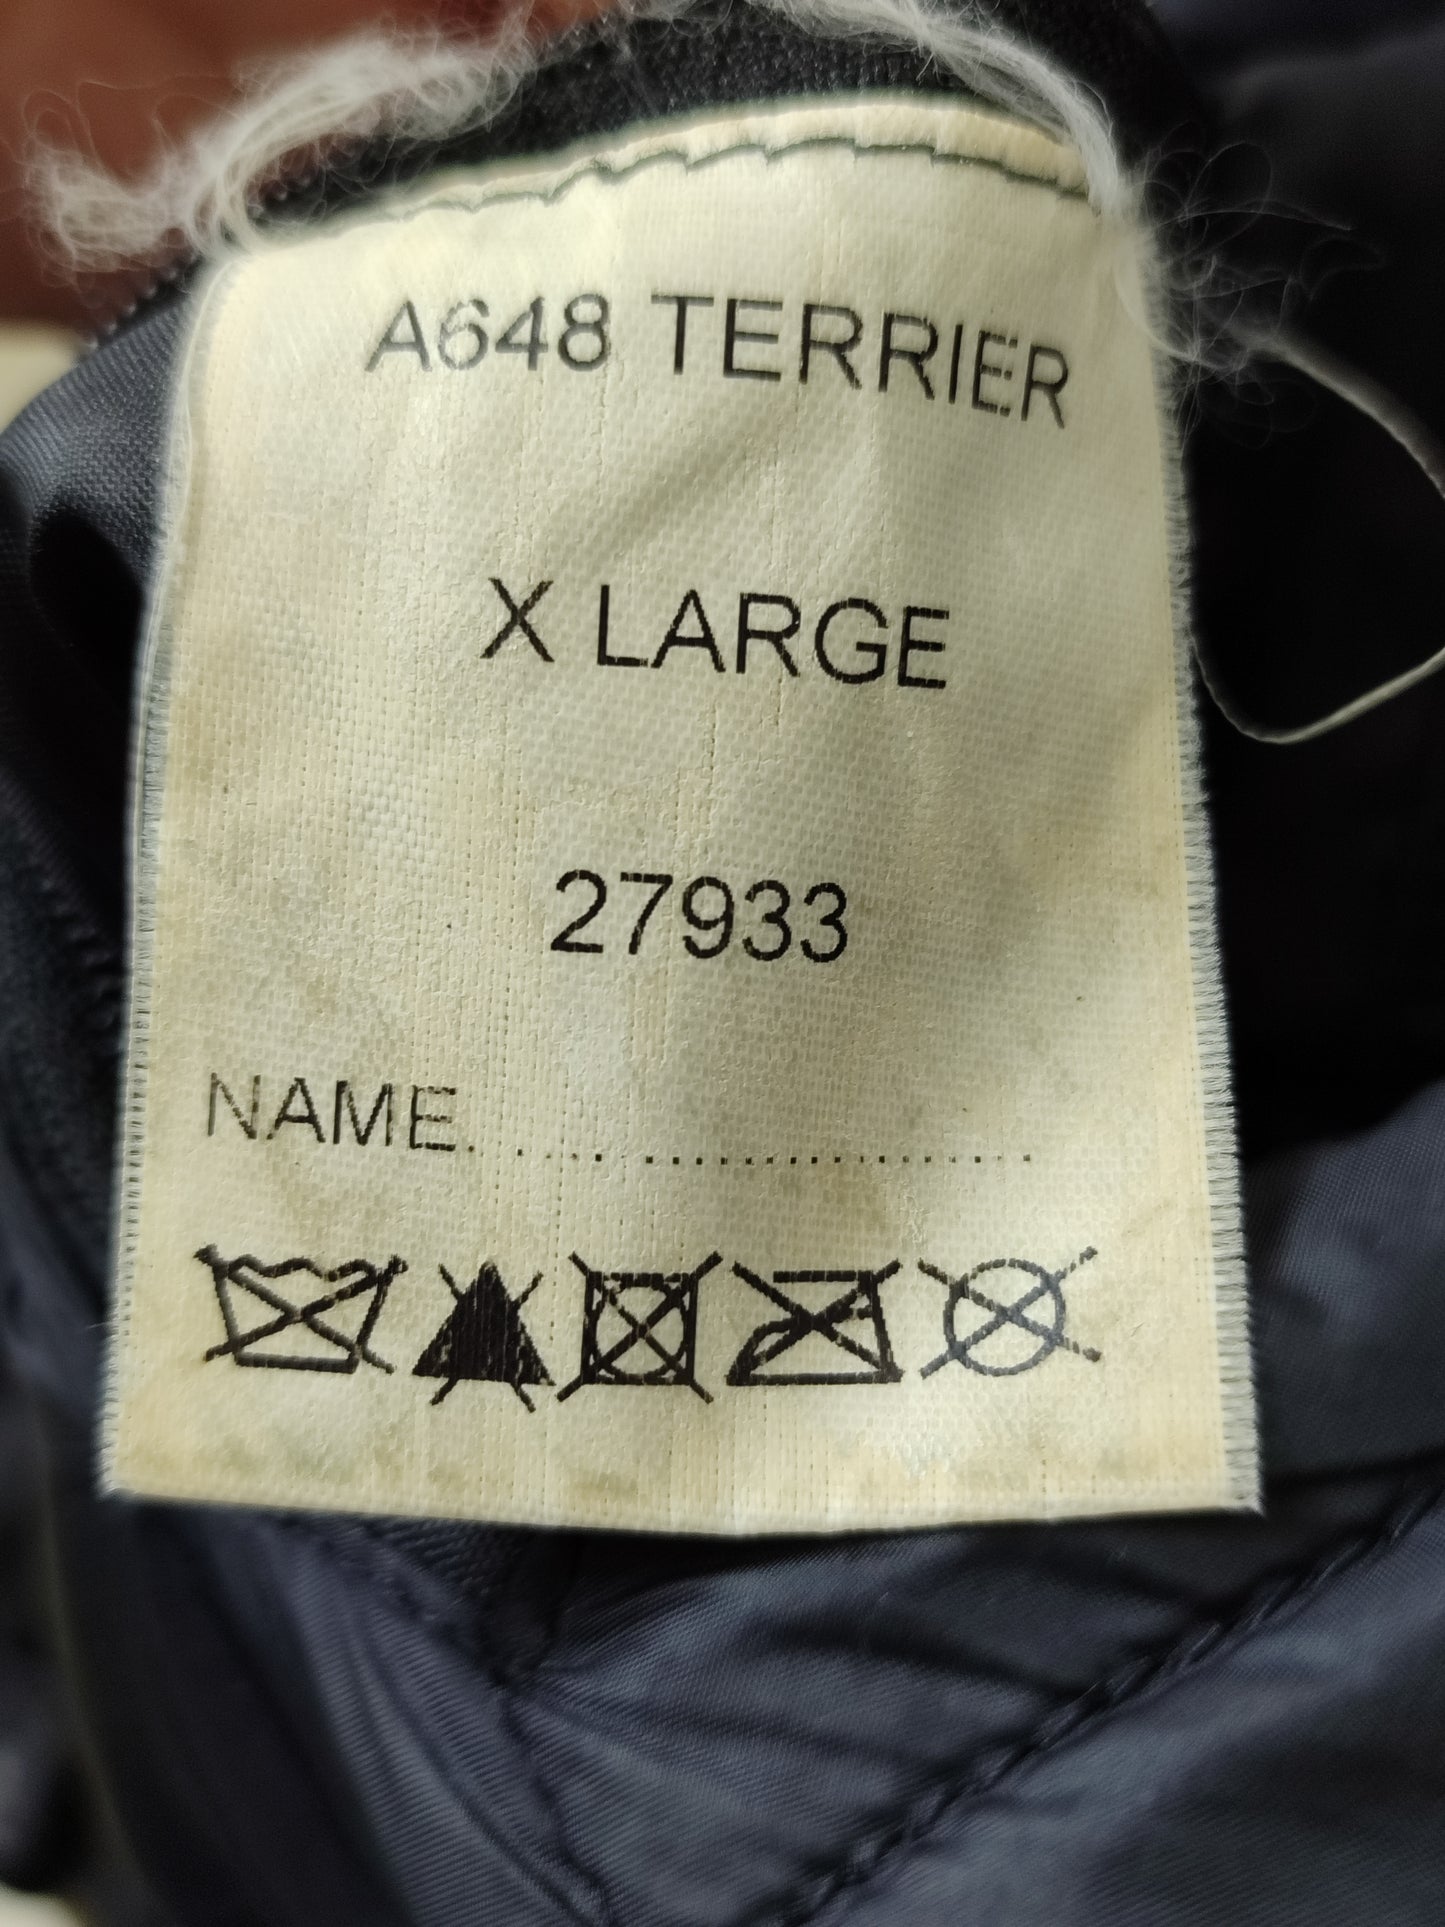 Giacca Barbour da uomo nera cerata Terrier XL - Man Black Wax Terrier Jacket size XL